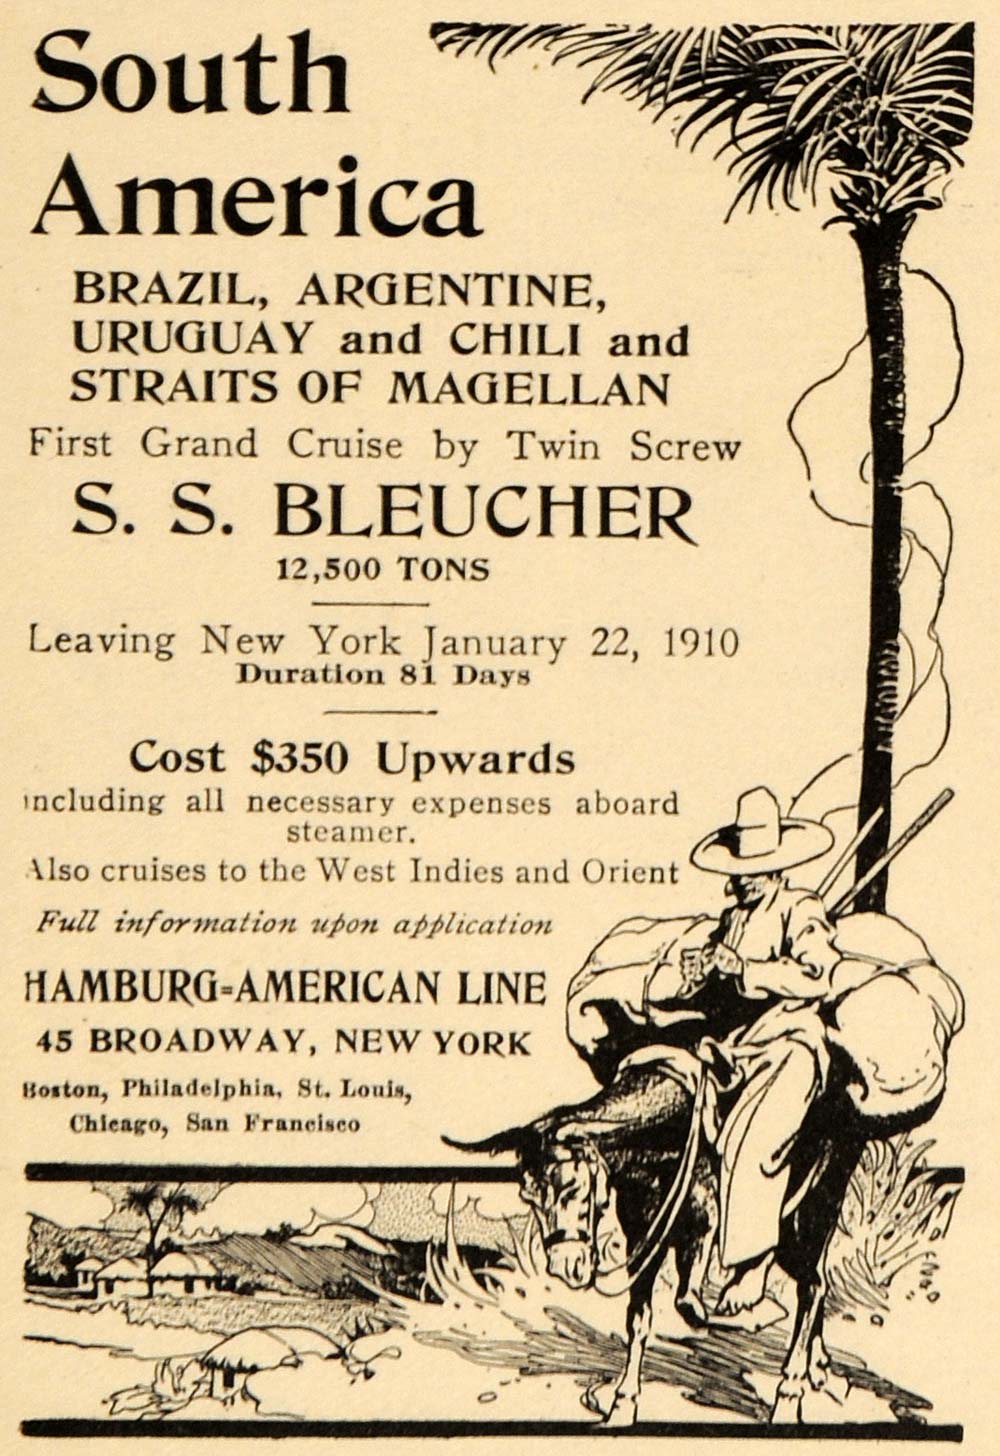 1909 Ad Hamburg American Line Cruise South America - ORIGINAL ADVERTISING EM2